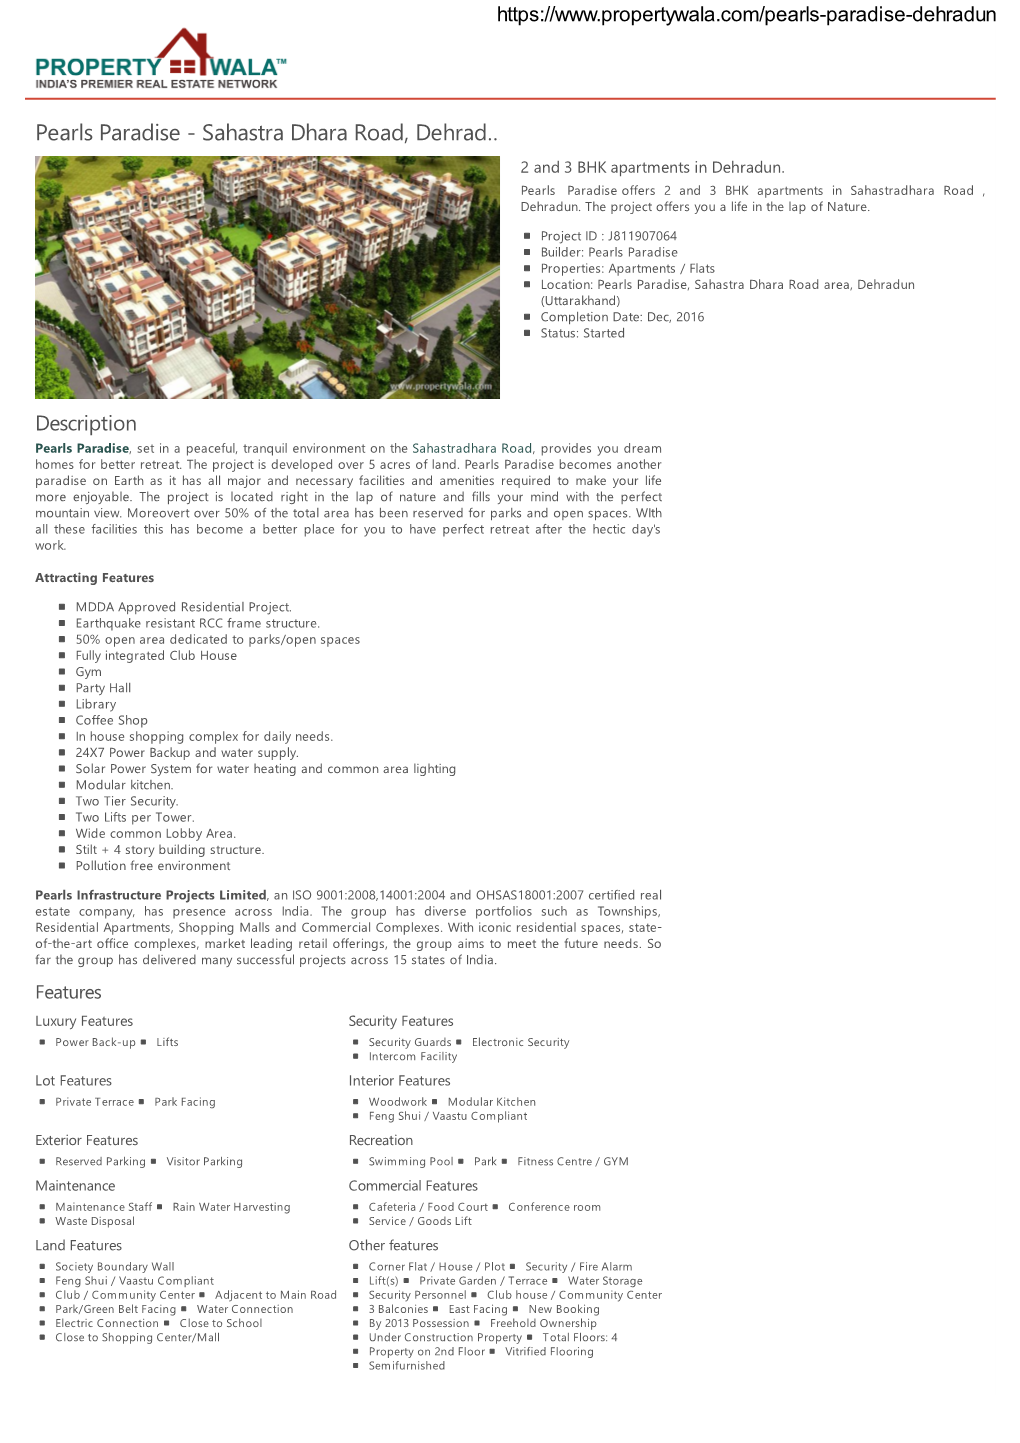 Pearls Paradise - Sahastra Dhara Road, Dehrad… 2 and 3 BHK Apartments in Dehradun